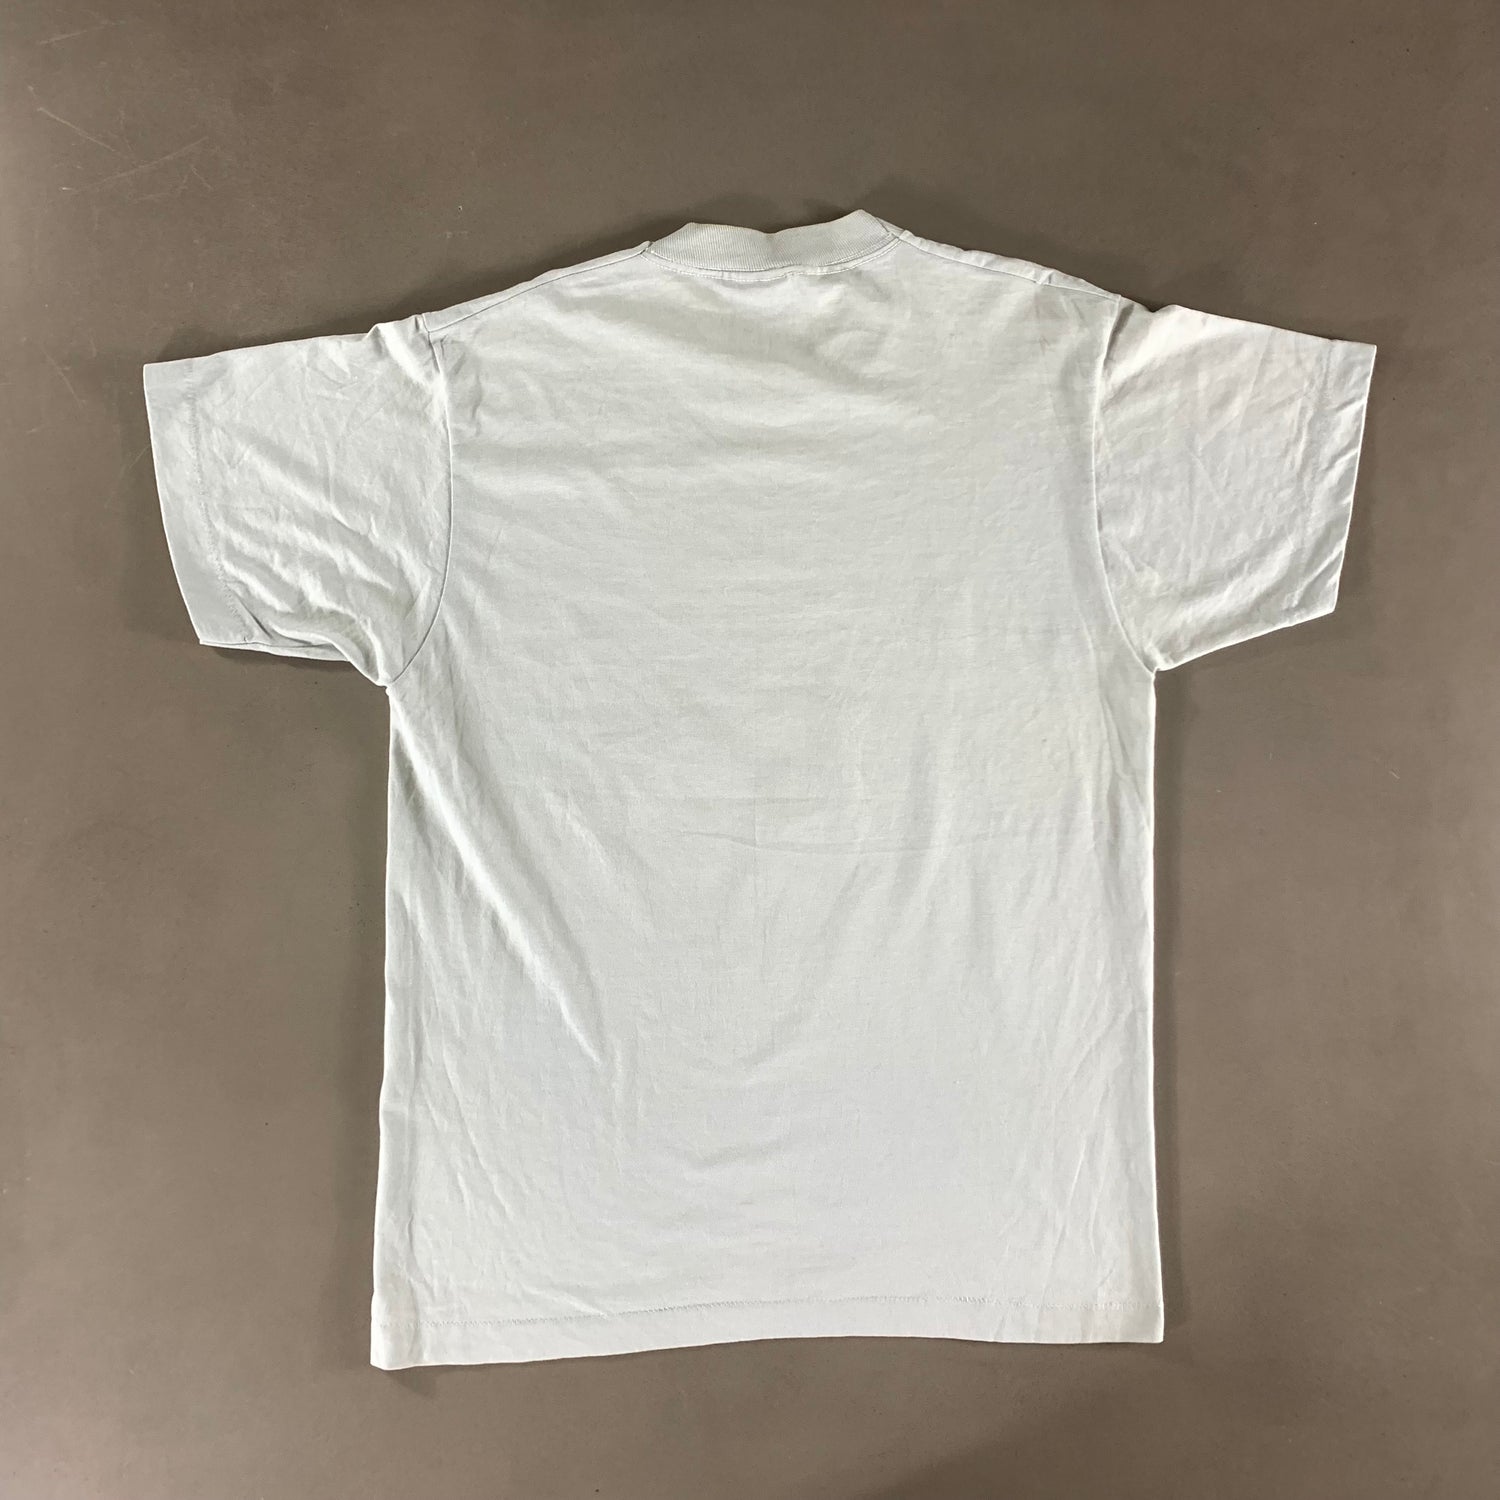 Vintage 1989 Pennsylvania T-shirt size Large